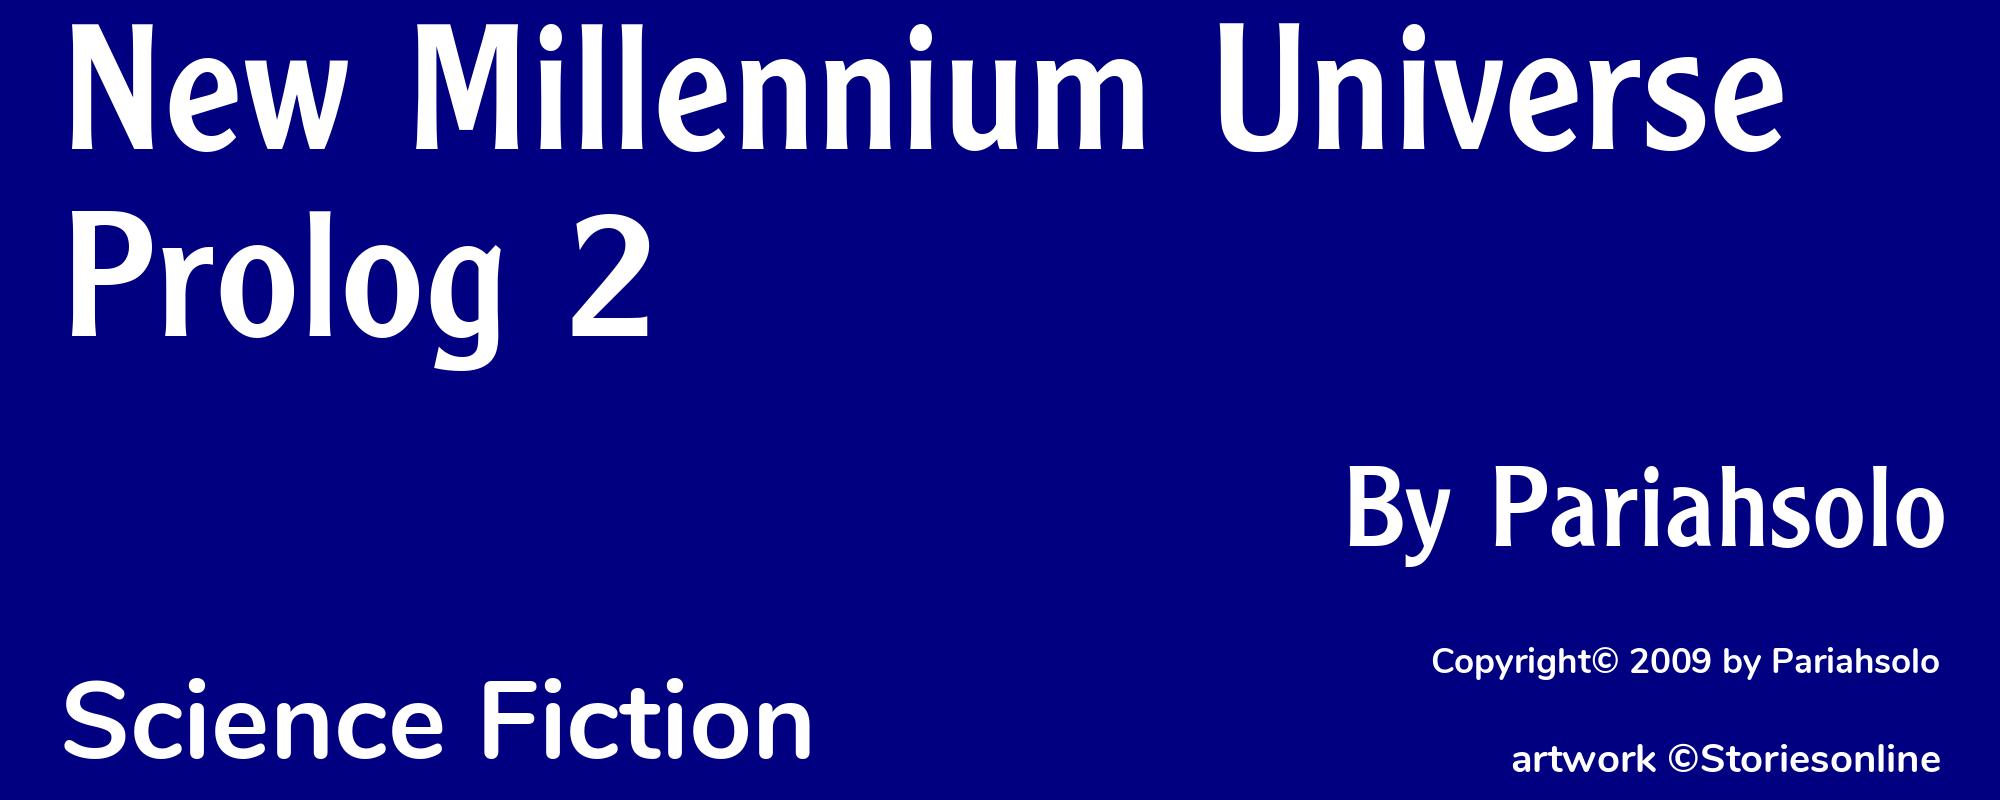 New Millennium Universe Prolog 2 - Cover